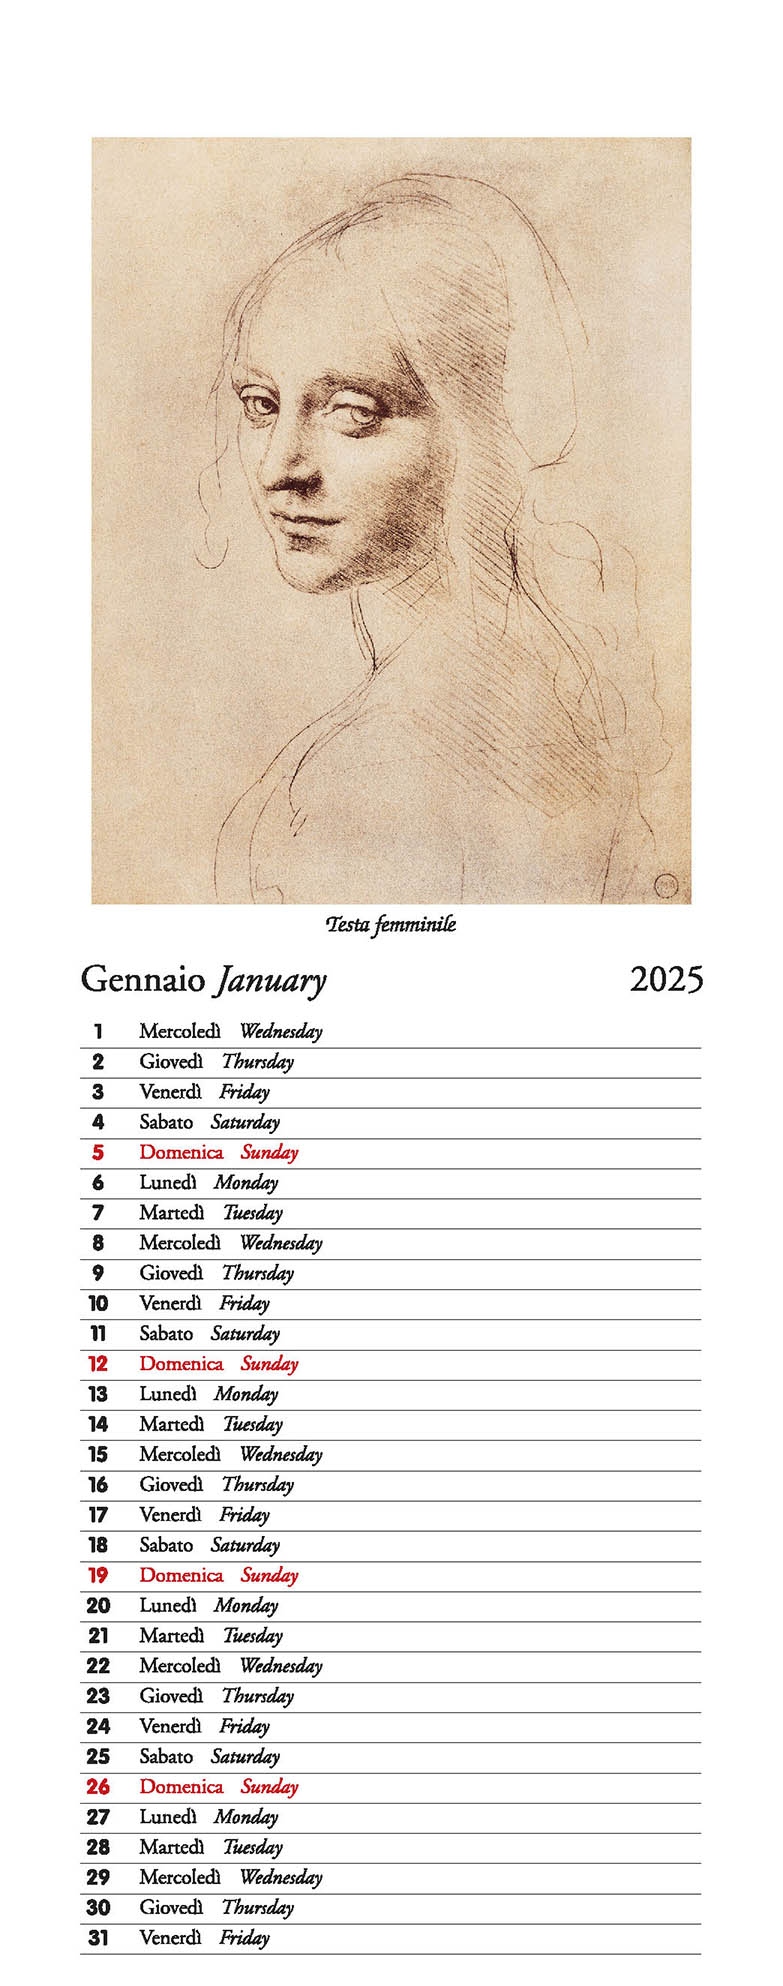 Drawings by Leonardo 2025 